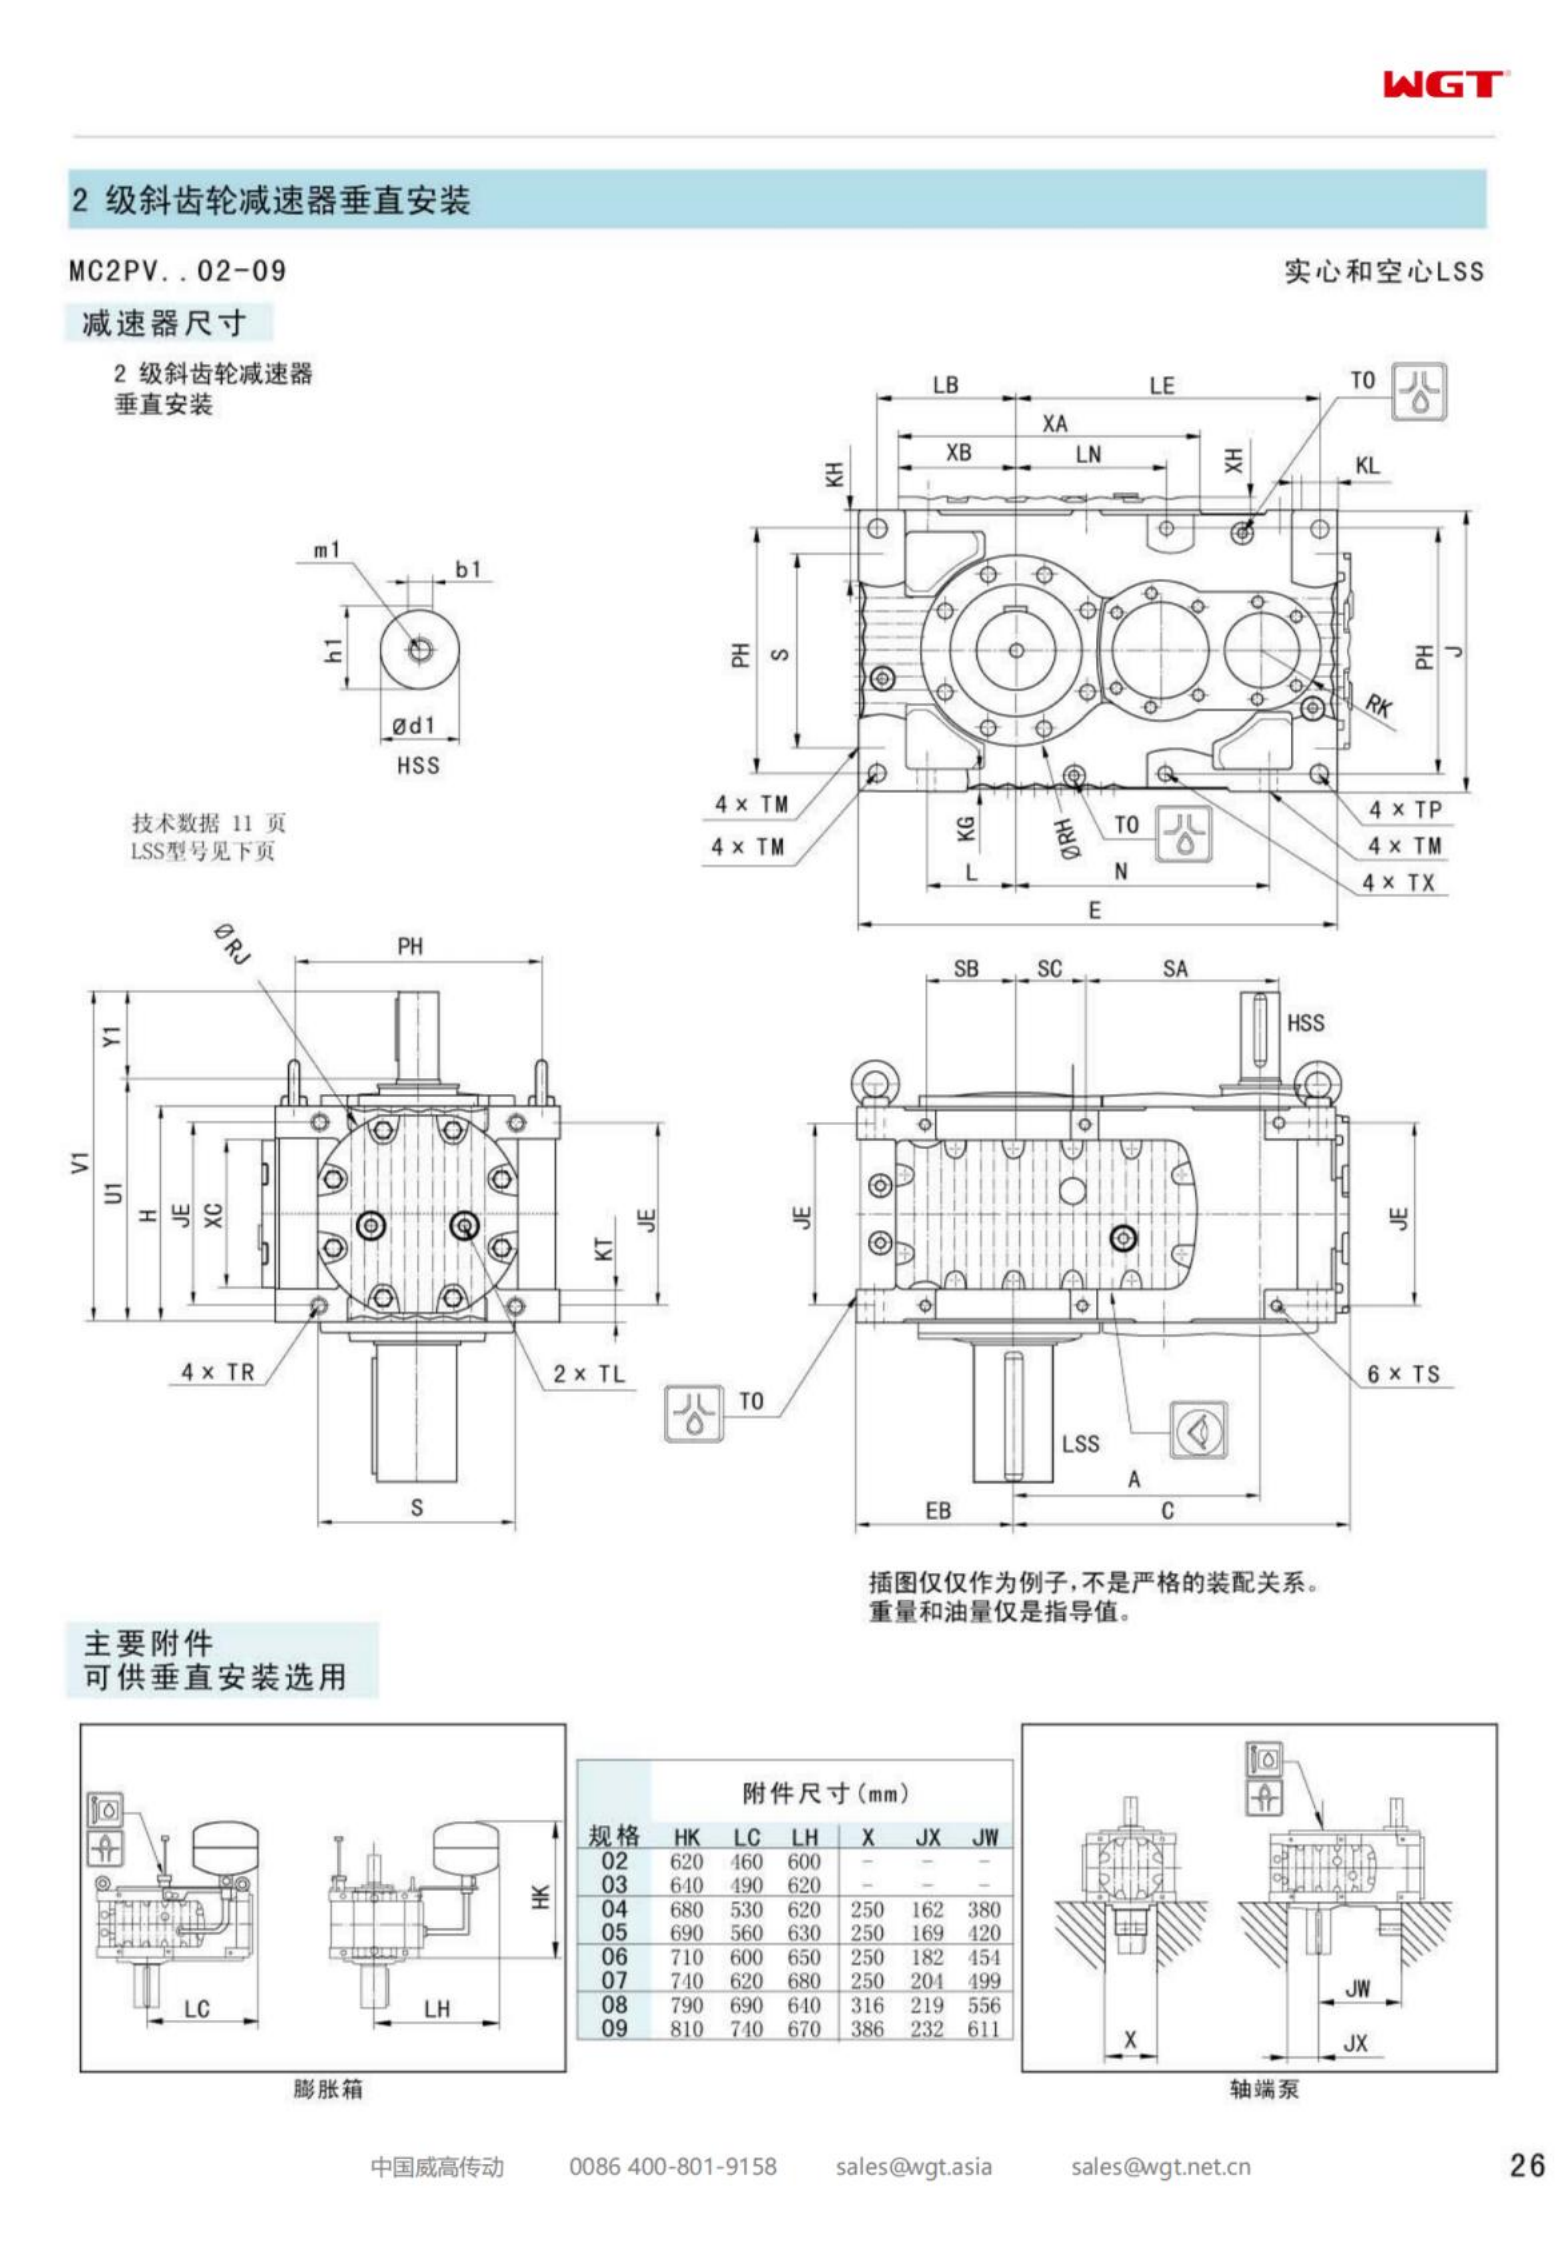 MC2PVHT03 replaces _SEW_MC_Series gearbox (patent)